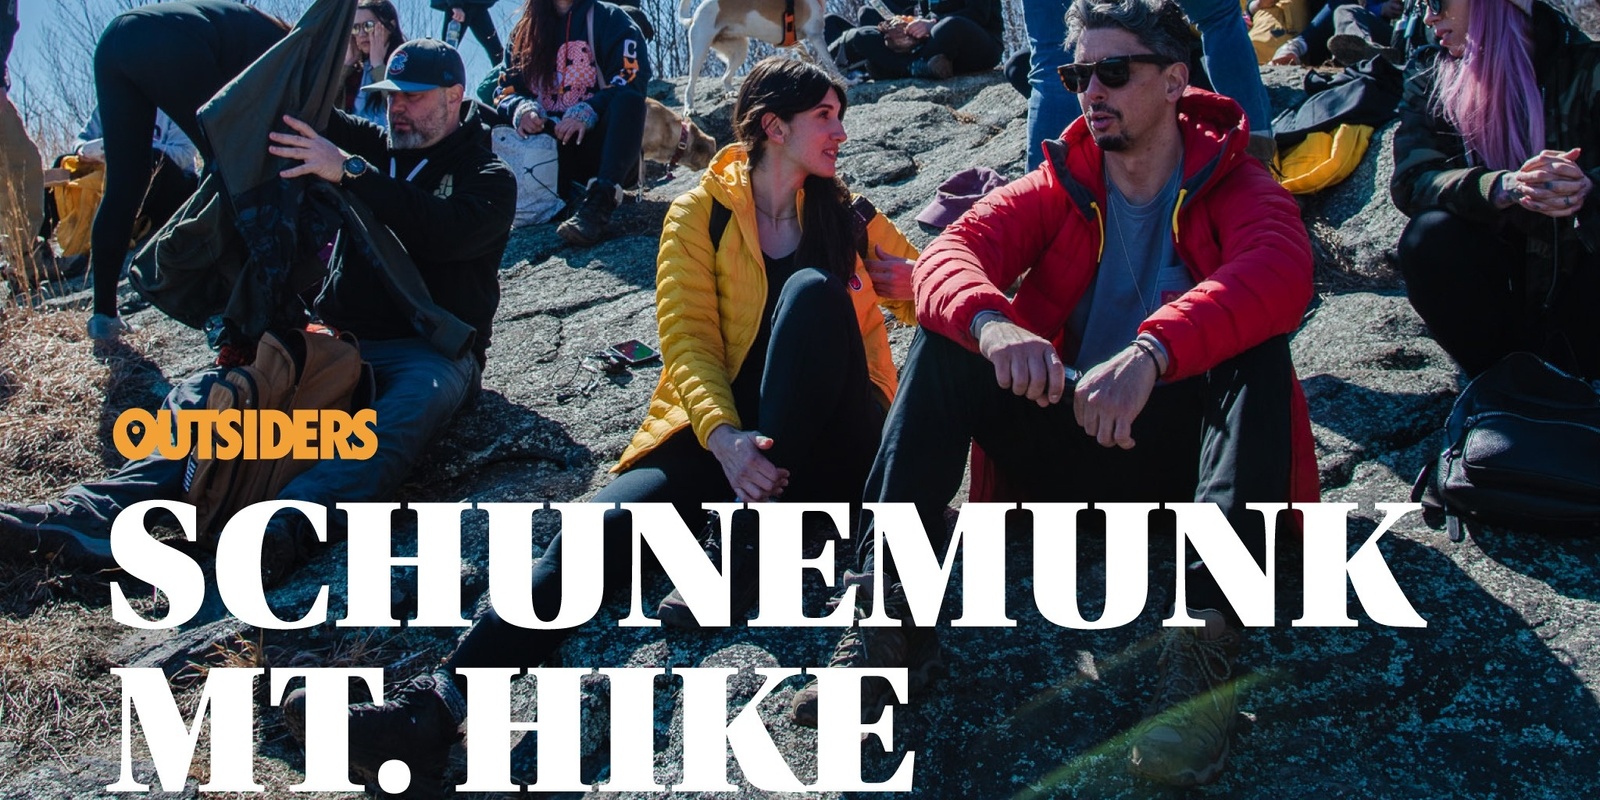 Banner image for Schunemunk Hike